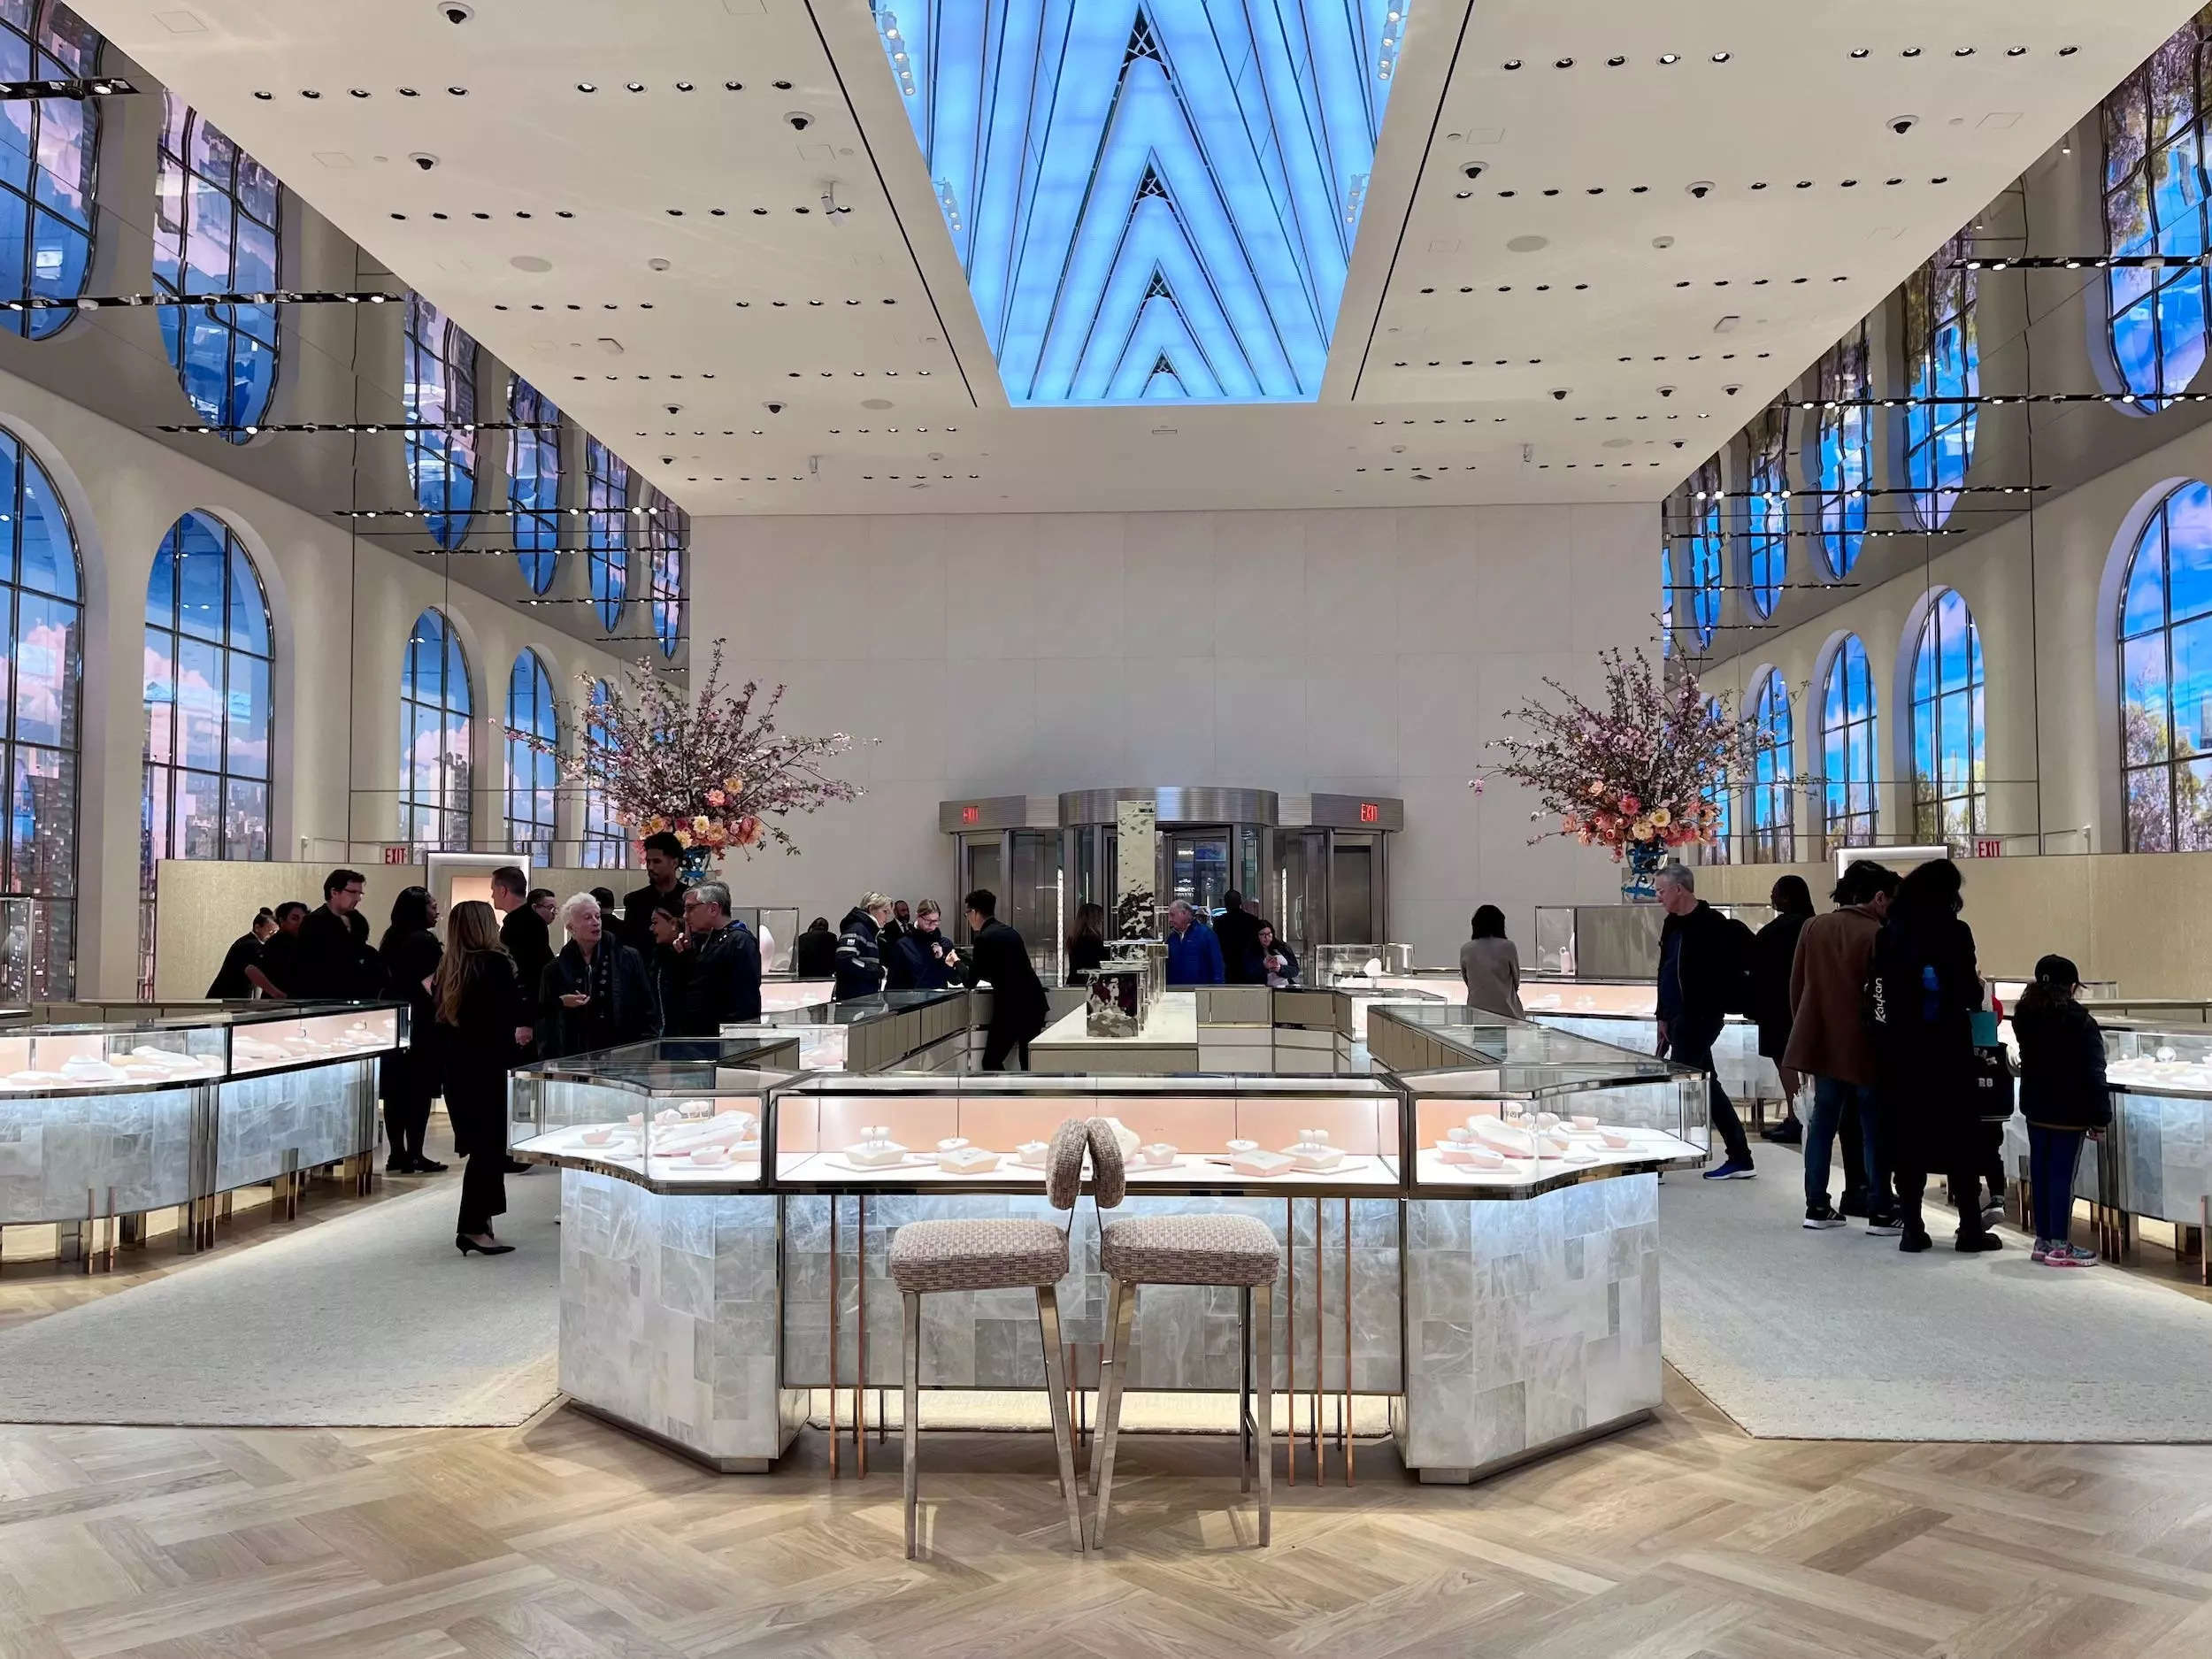 Tiffanys Louis Vuitton 5th Ave 57th Street 2014 Stock Photo